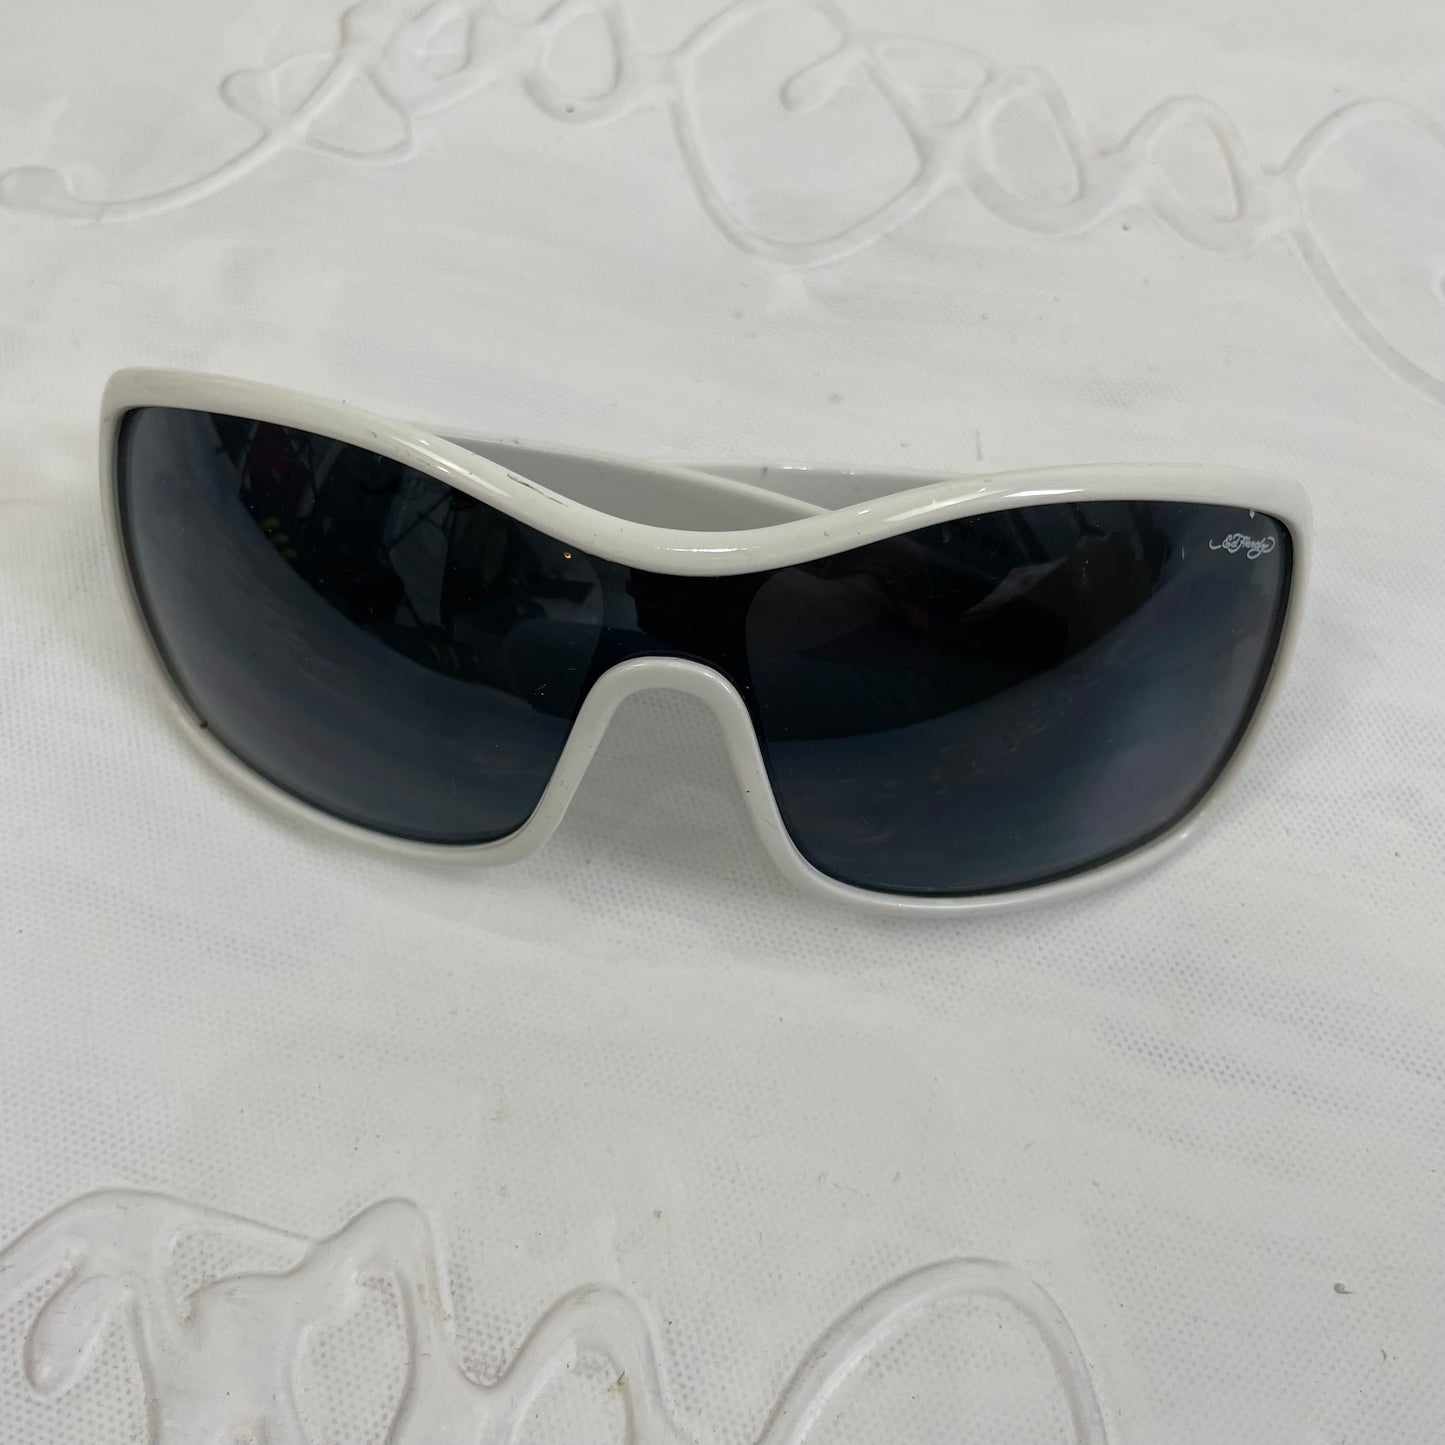 EUROPEAN SUMMER DROP | white ed hardy sunglasses